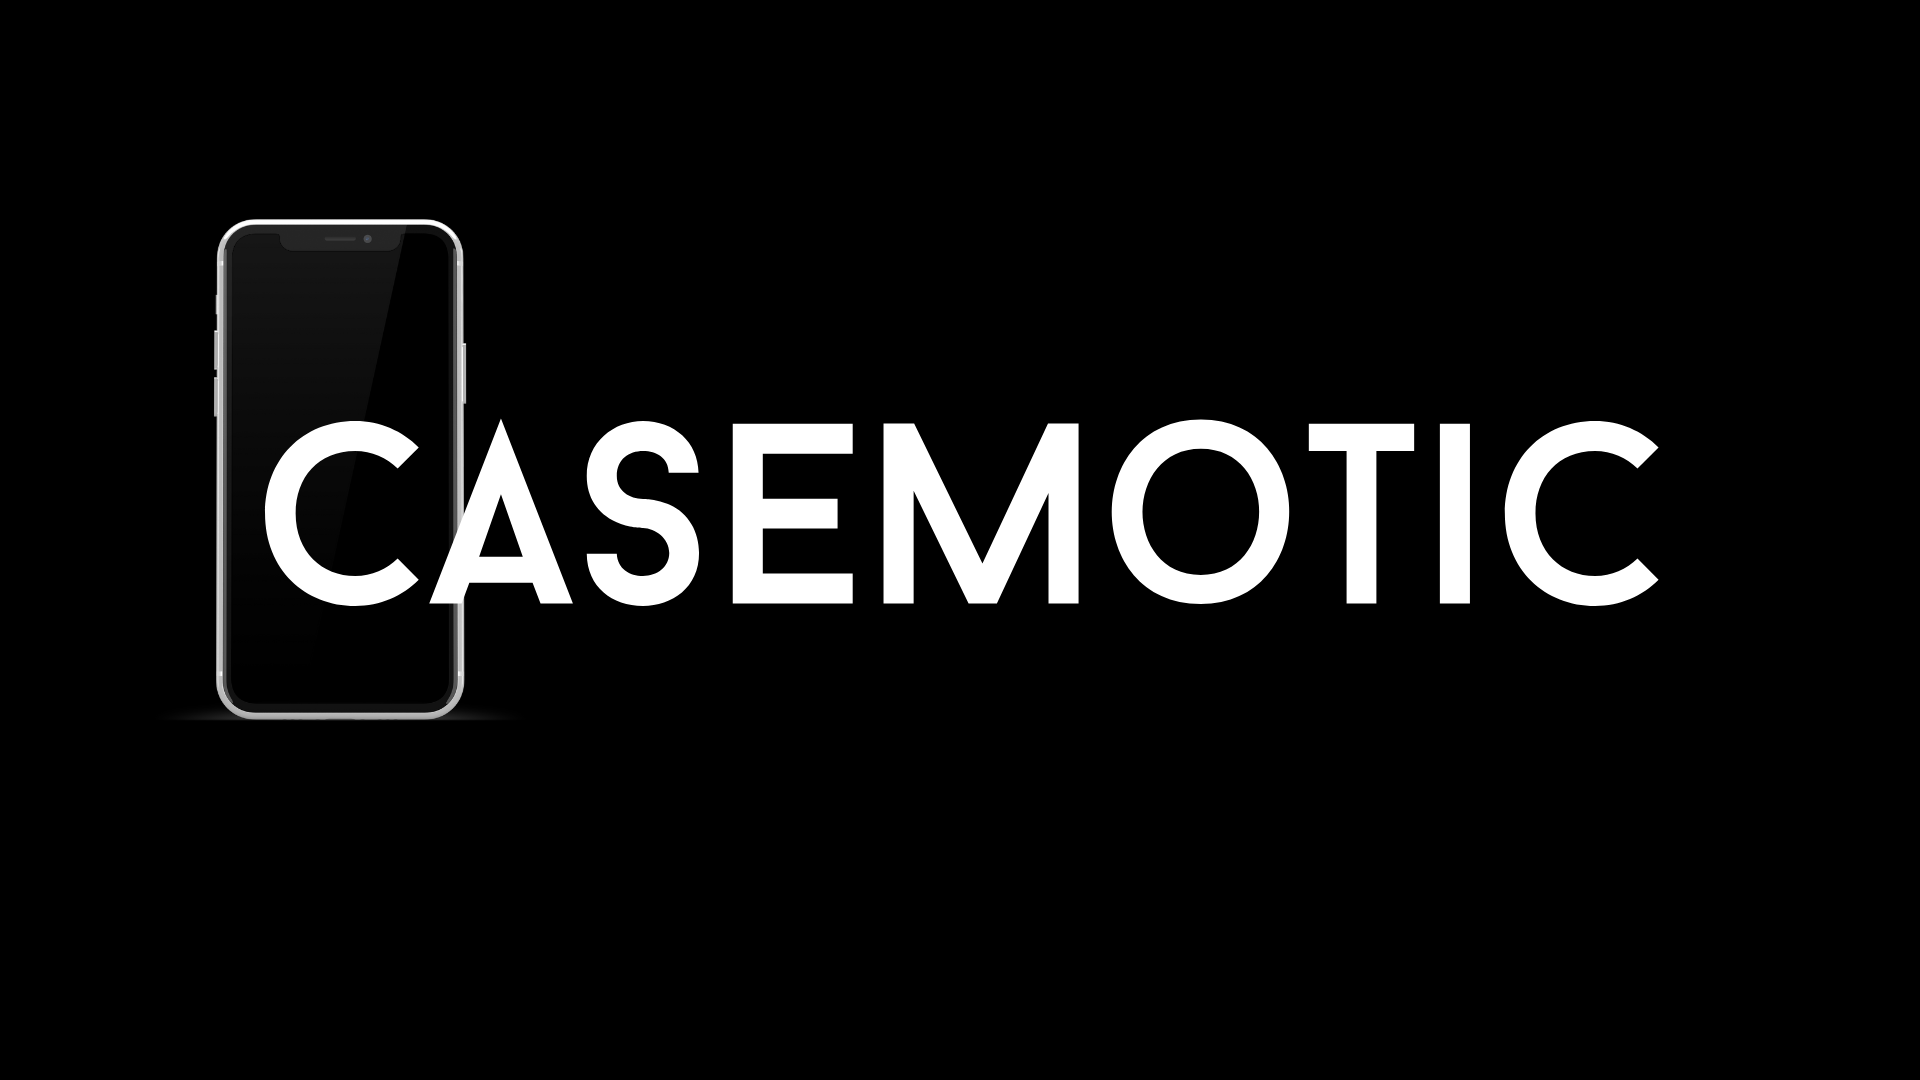 Casemotic | Phone Casing & Accessories online store